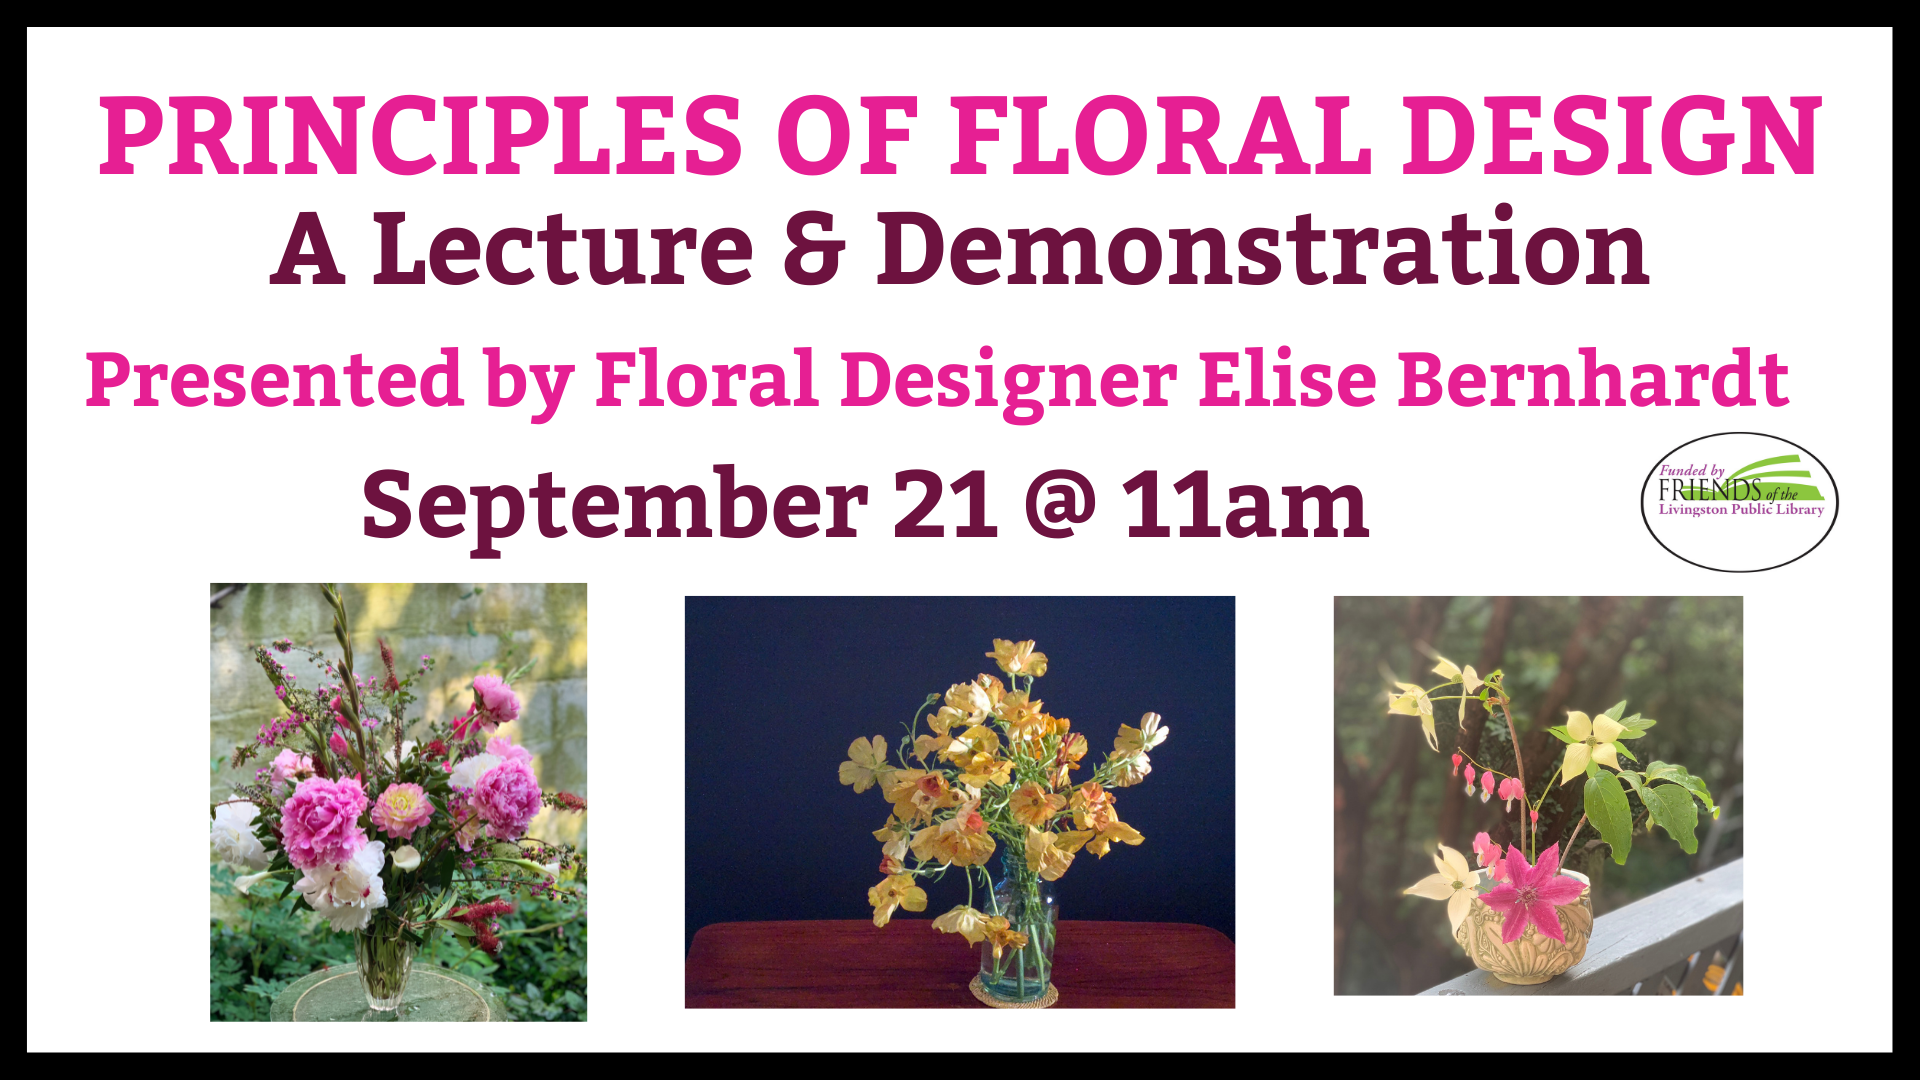 Floral design principles